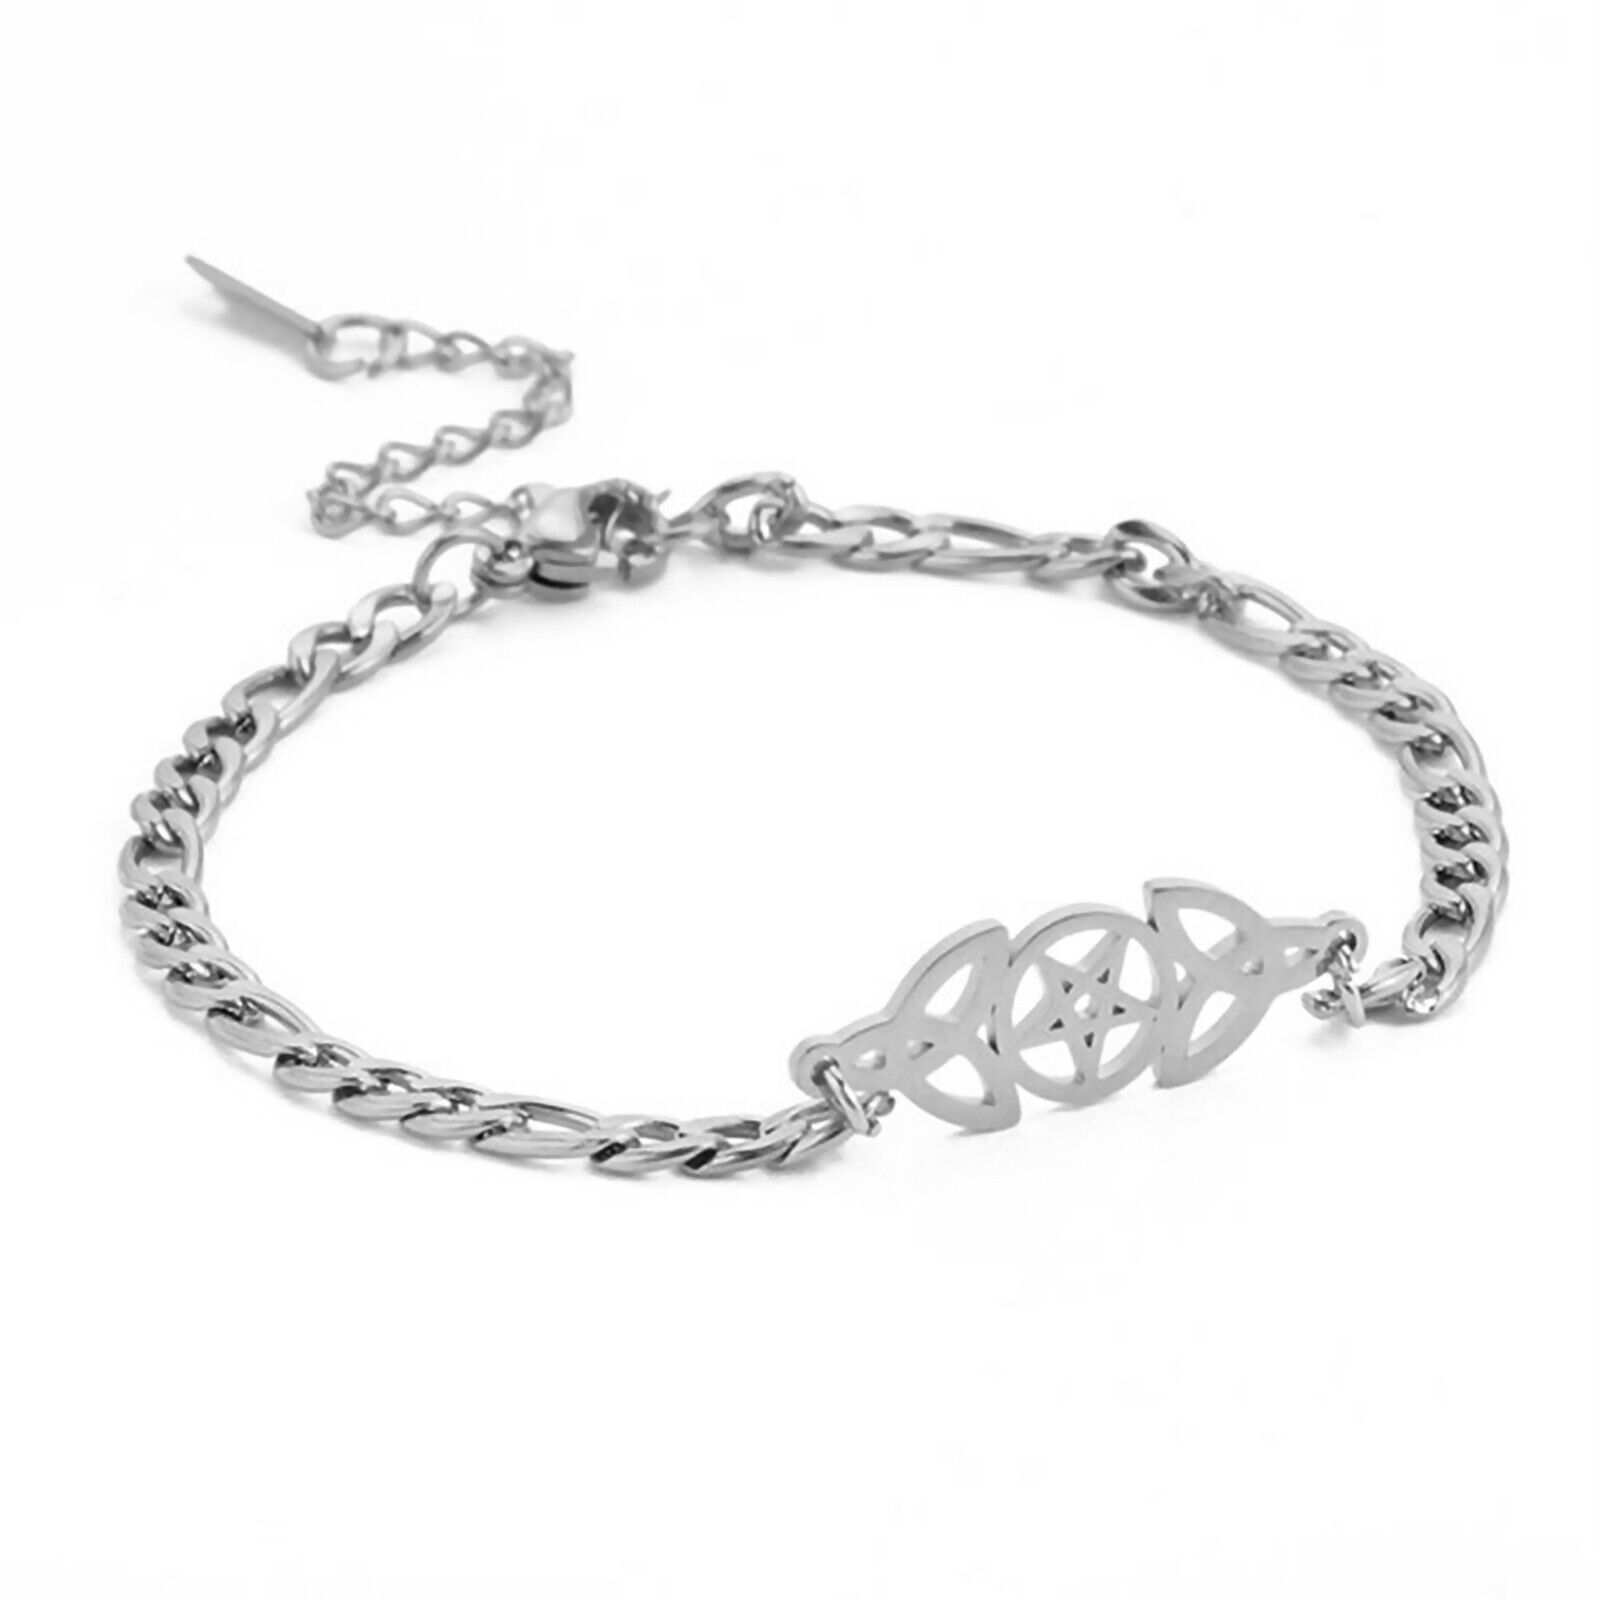 Triple Goddess Bracelet Silver Stainless Steel Pentacle Trinity Charm Bangle - $16.99